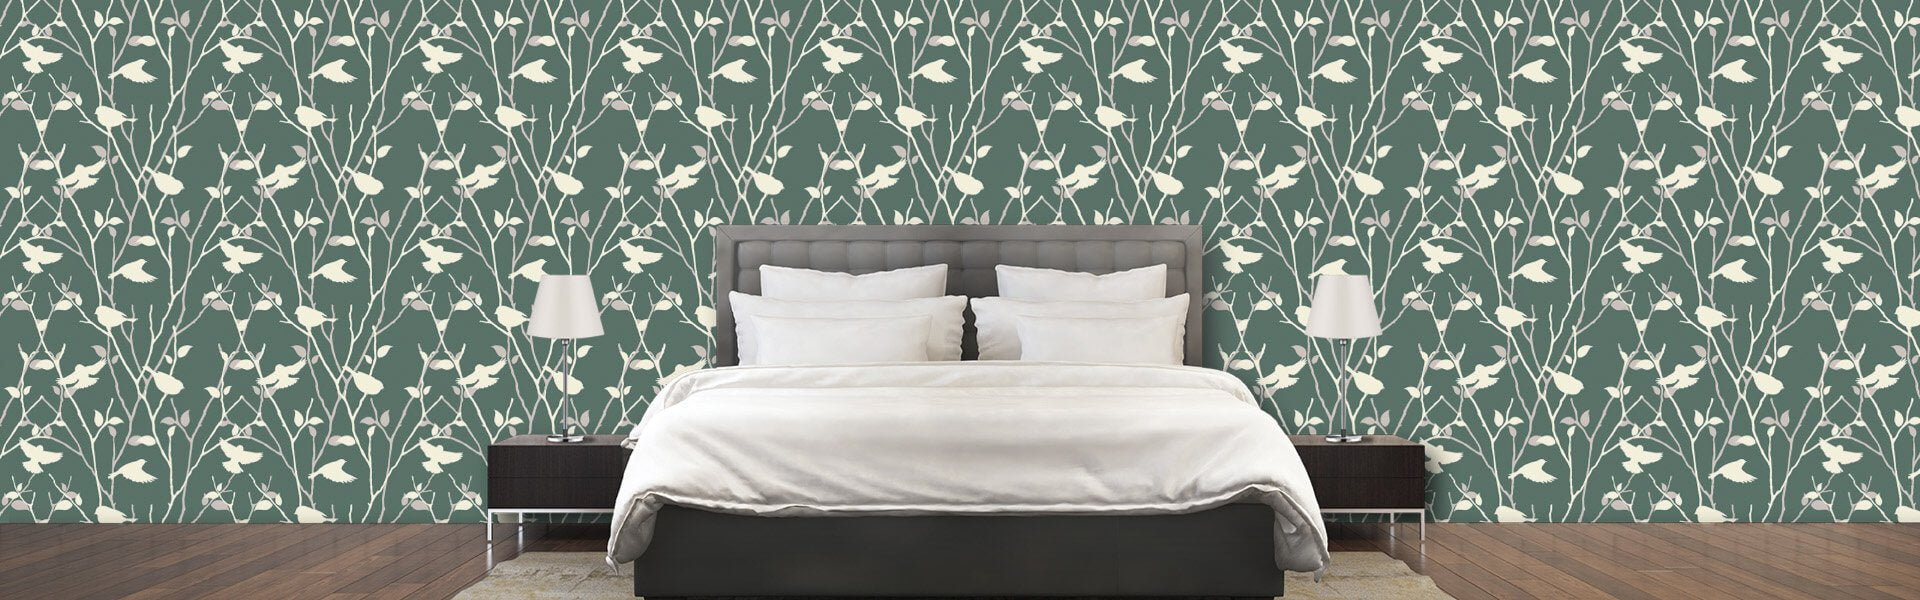 grey bird animal fabric removable wallpaper